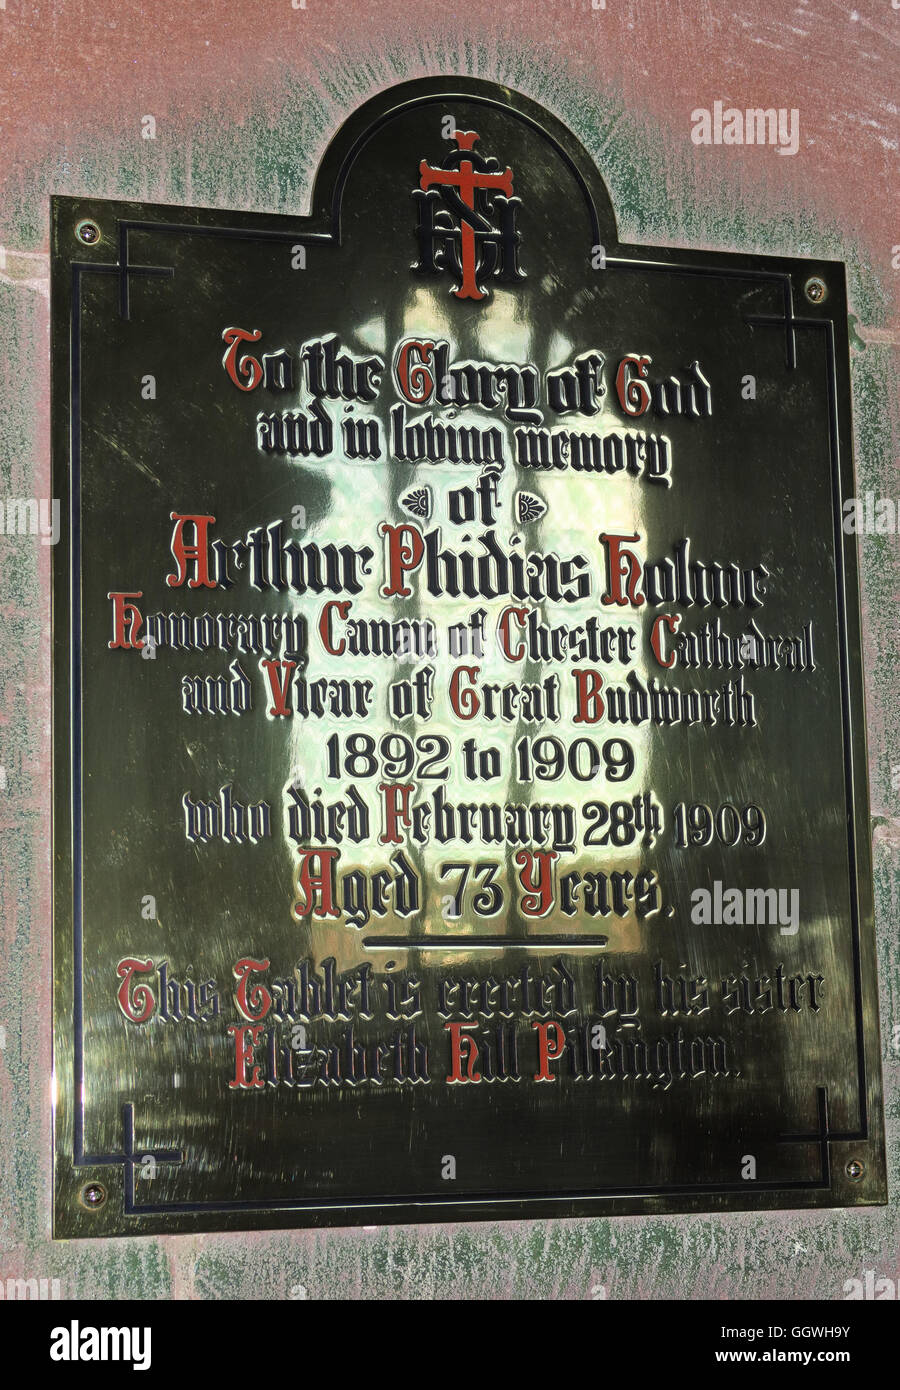 St Marys & All Saints Church Gt Budworth Interior, Cheshire, England,UK - Brass plaque tablet Stock Photo